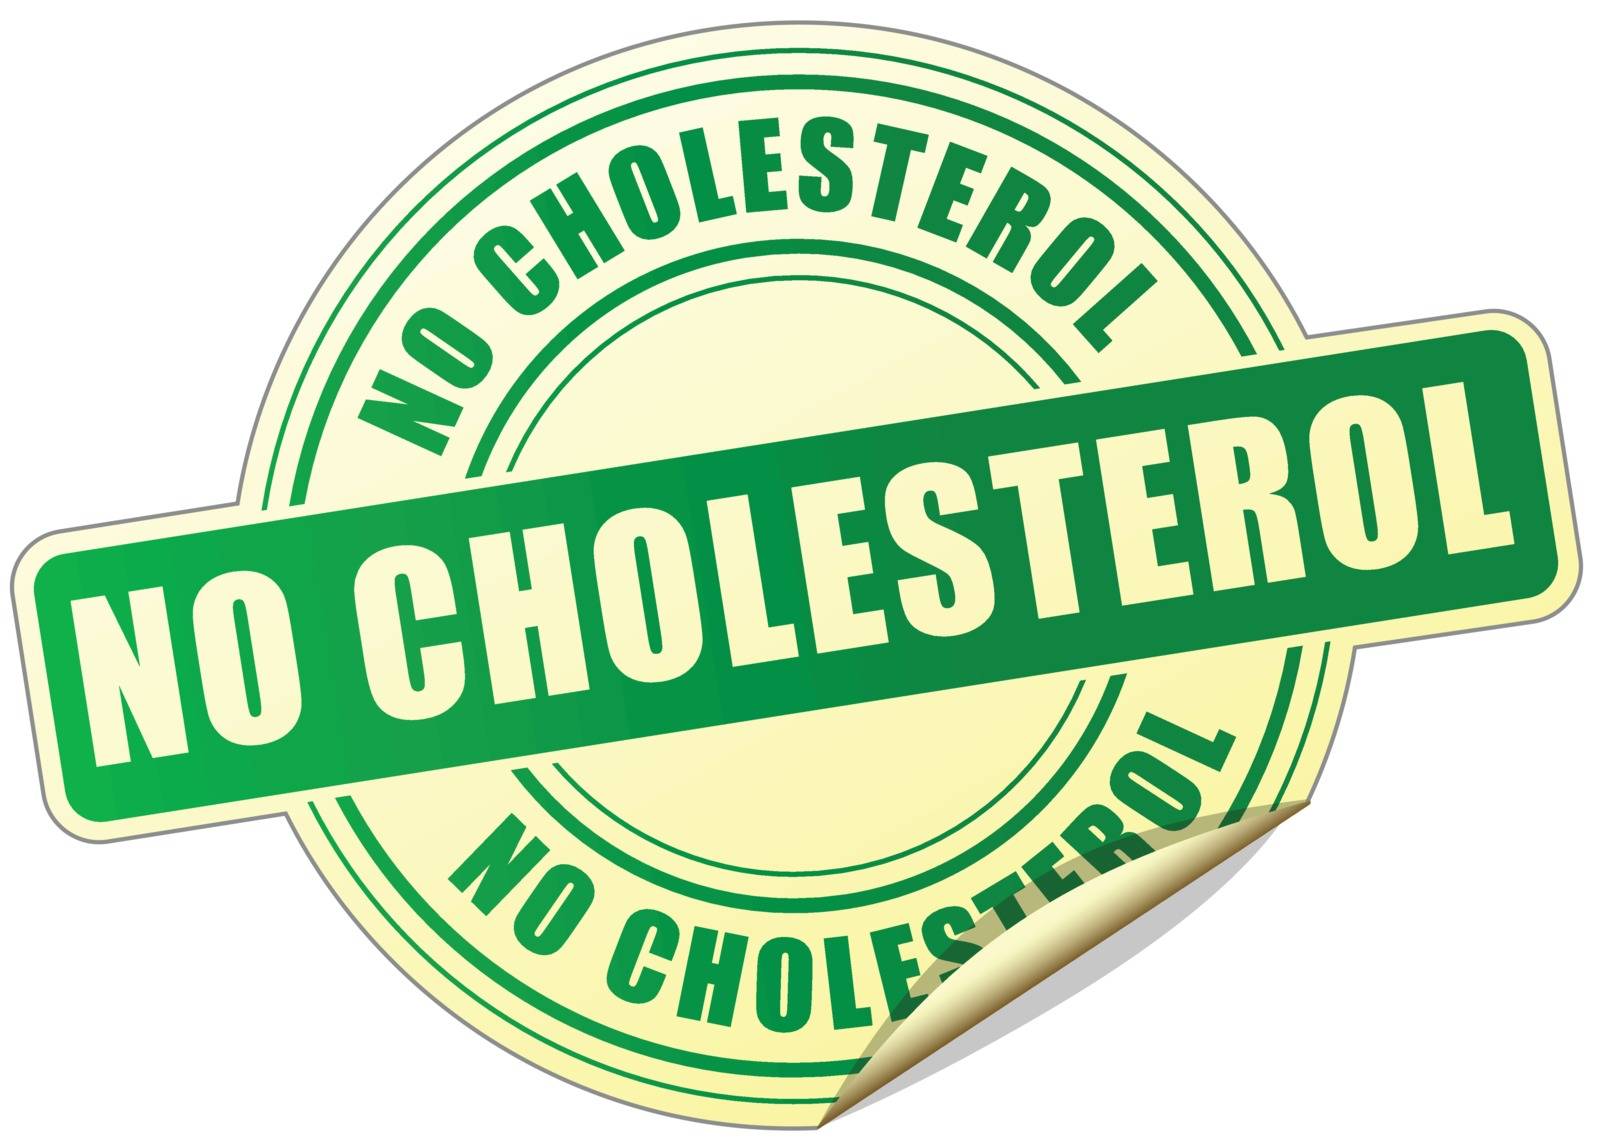 illustration of no cholesterol sticker on white background